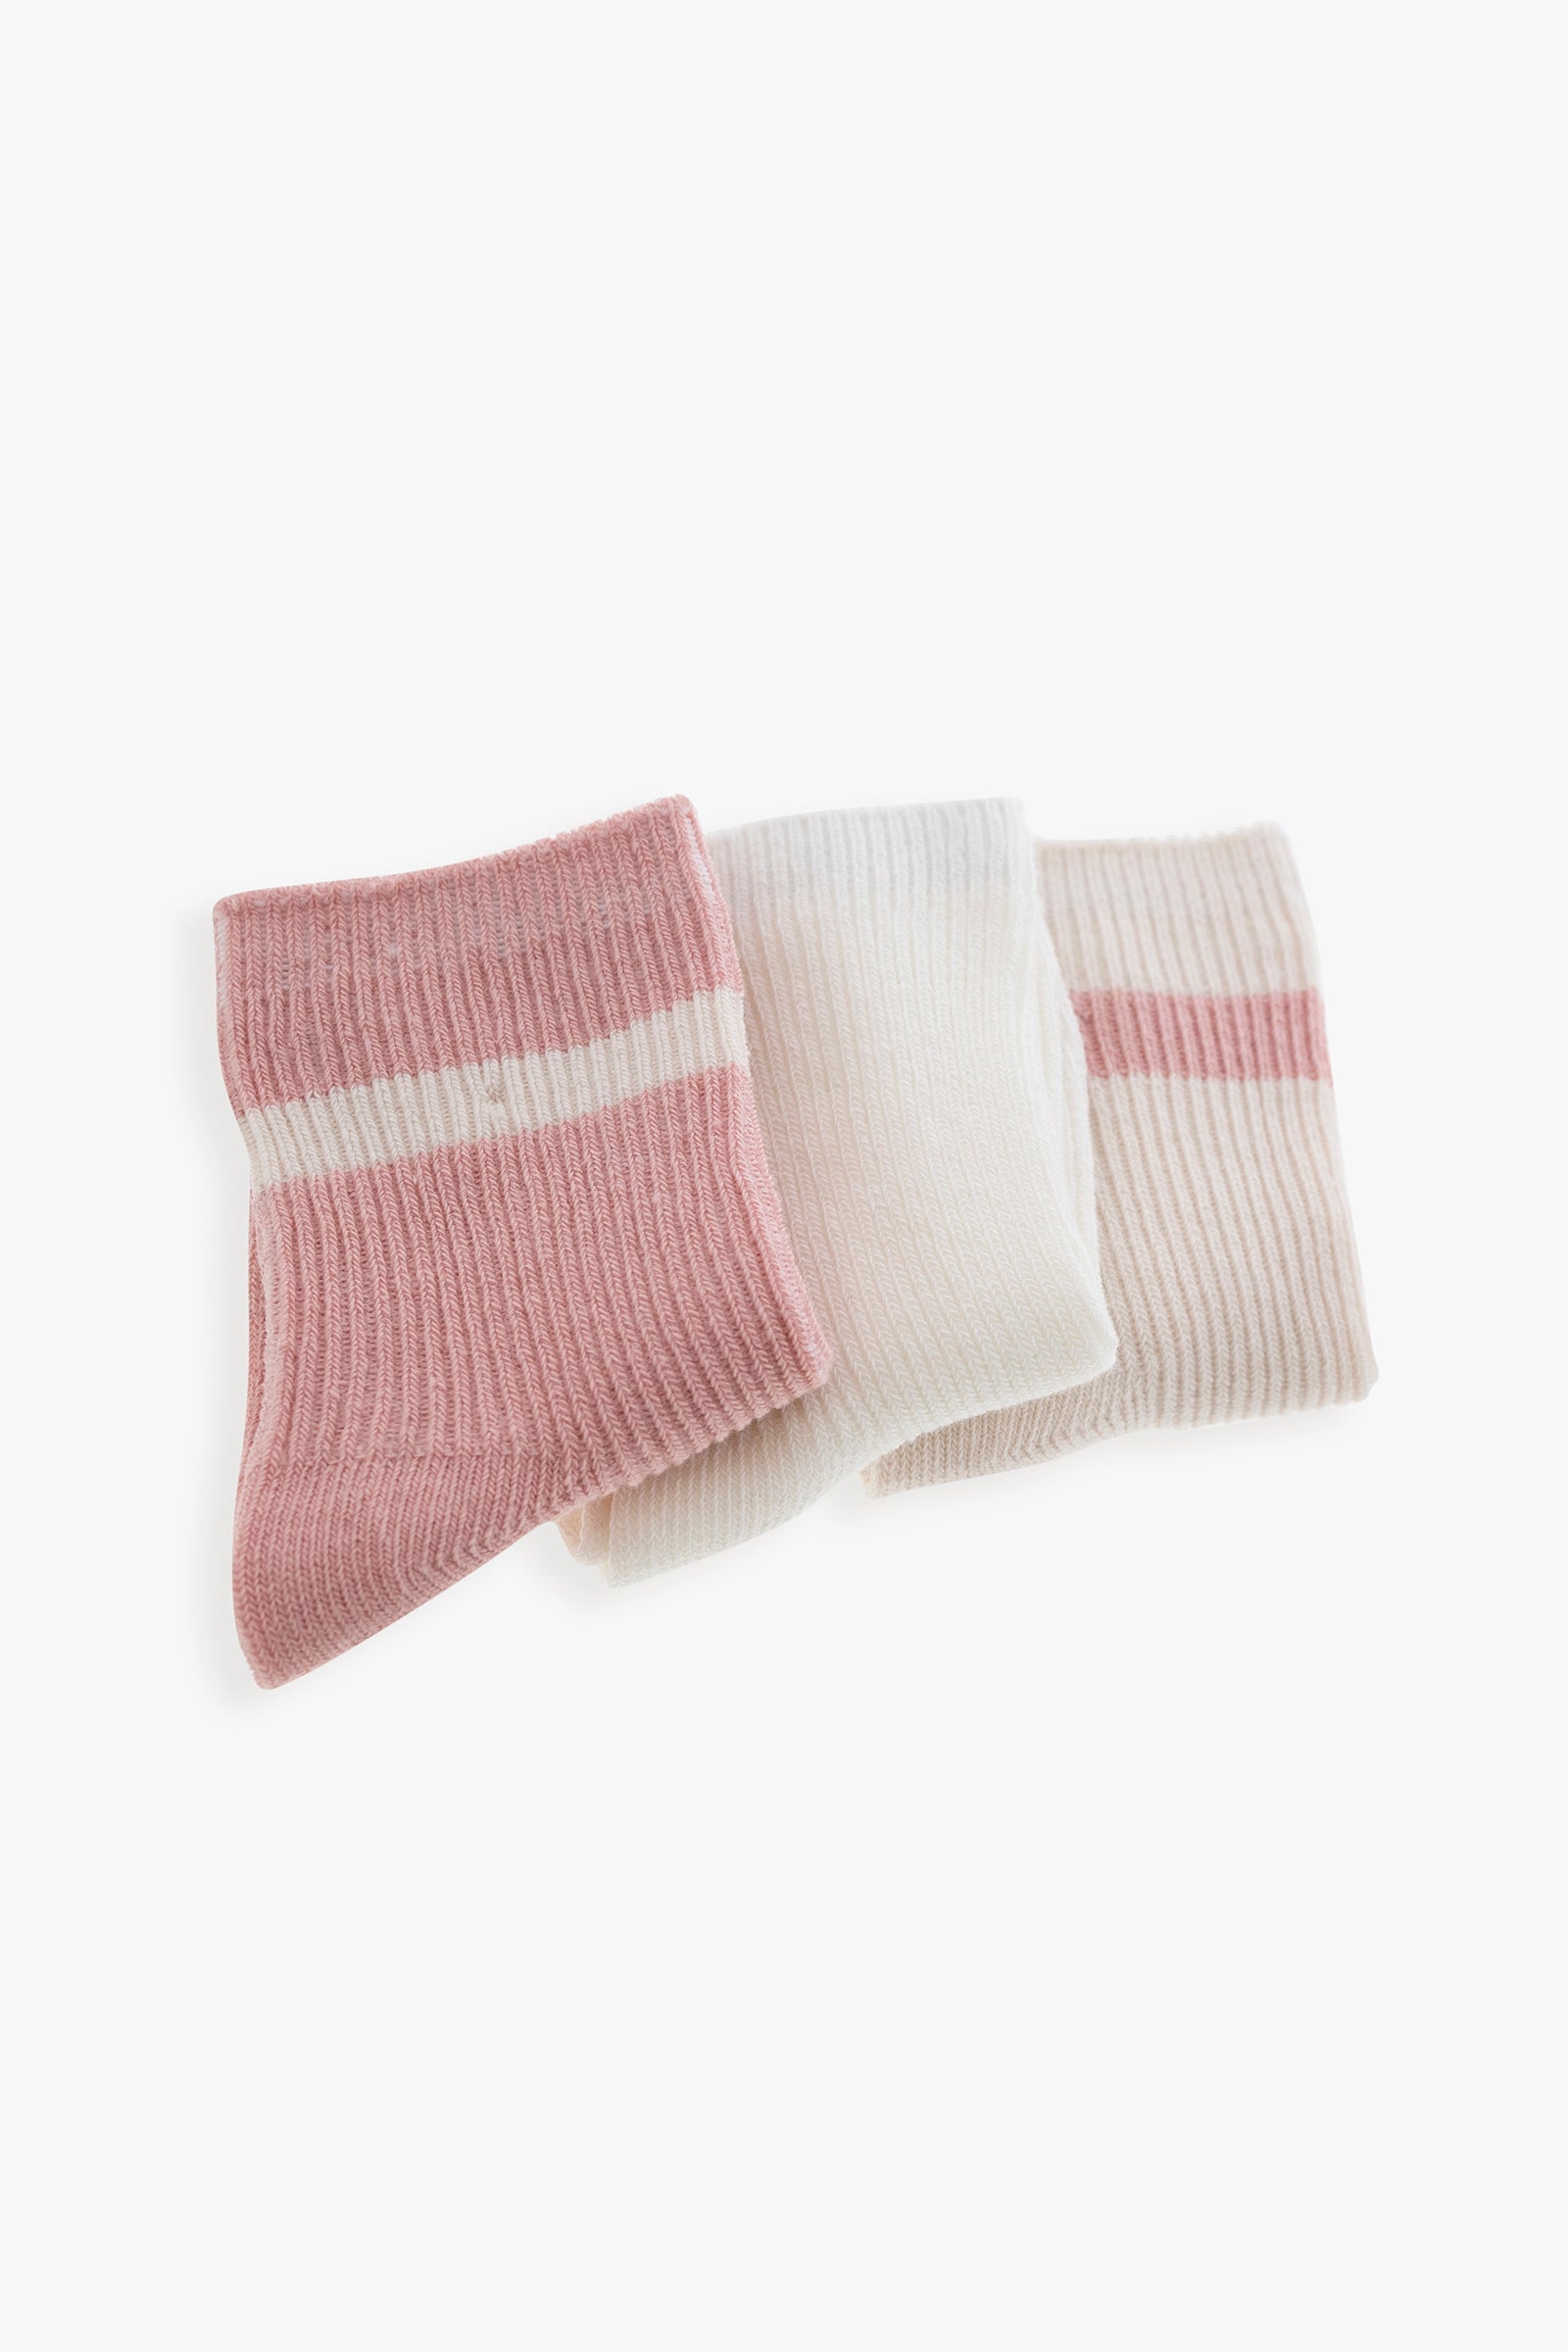 Organic 3-Pack Baby Crew Socks - Misty Rose